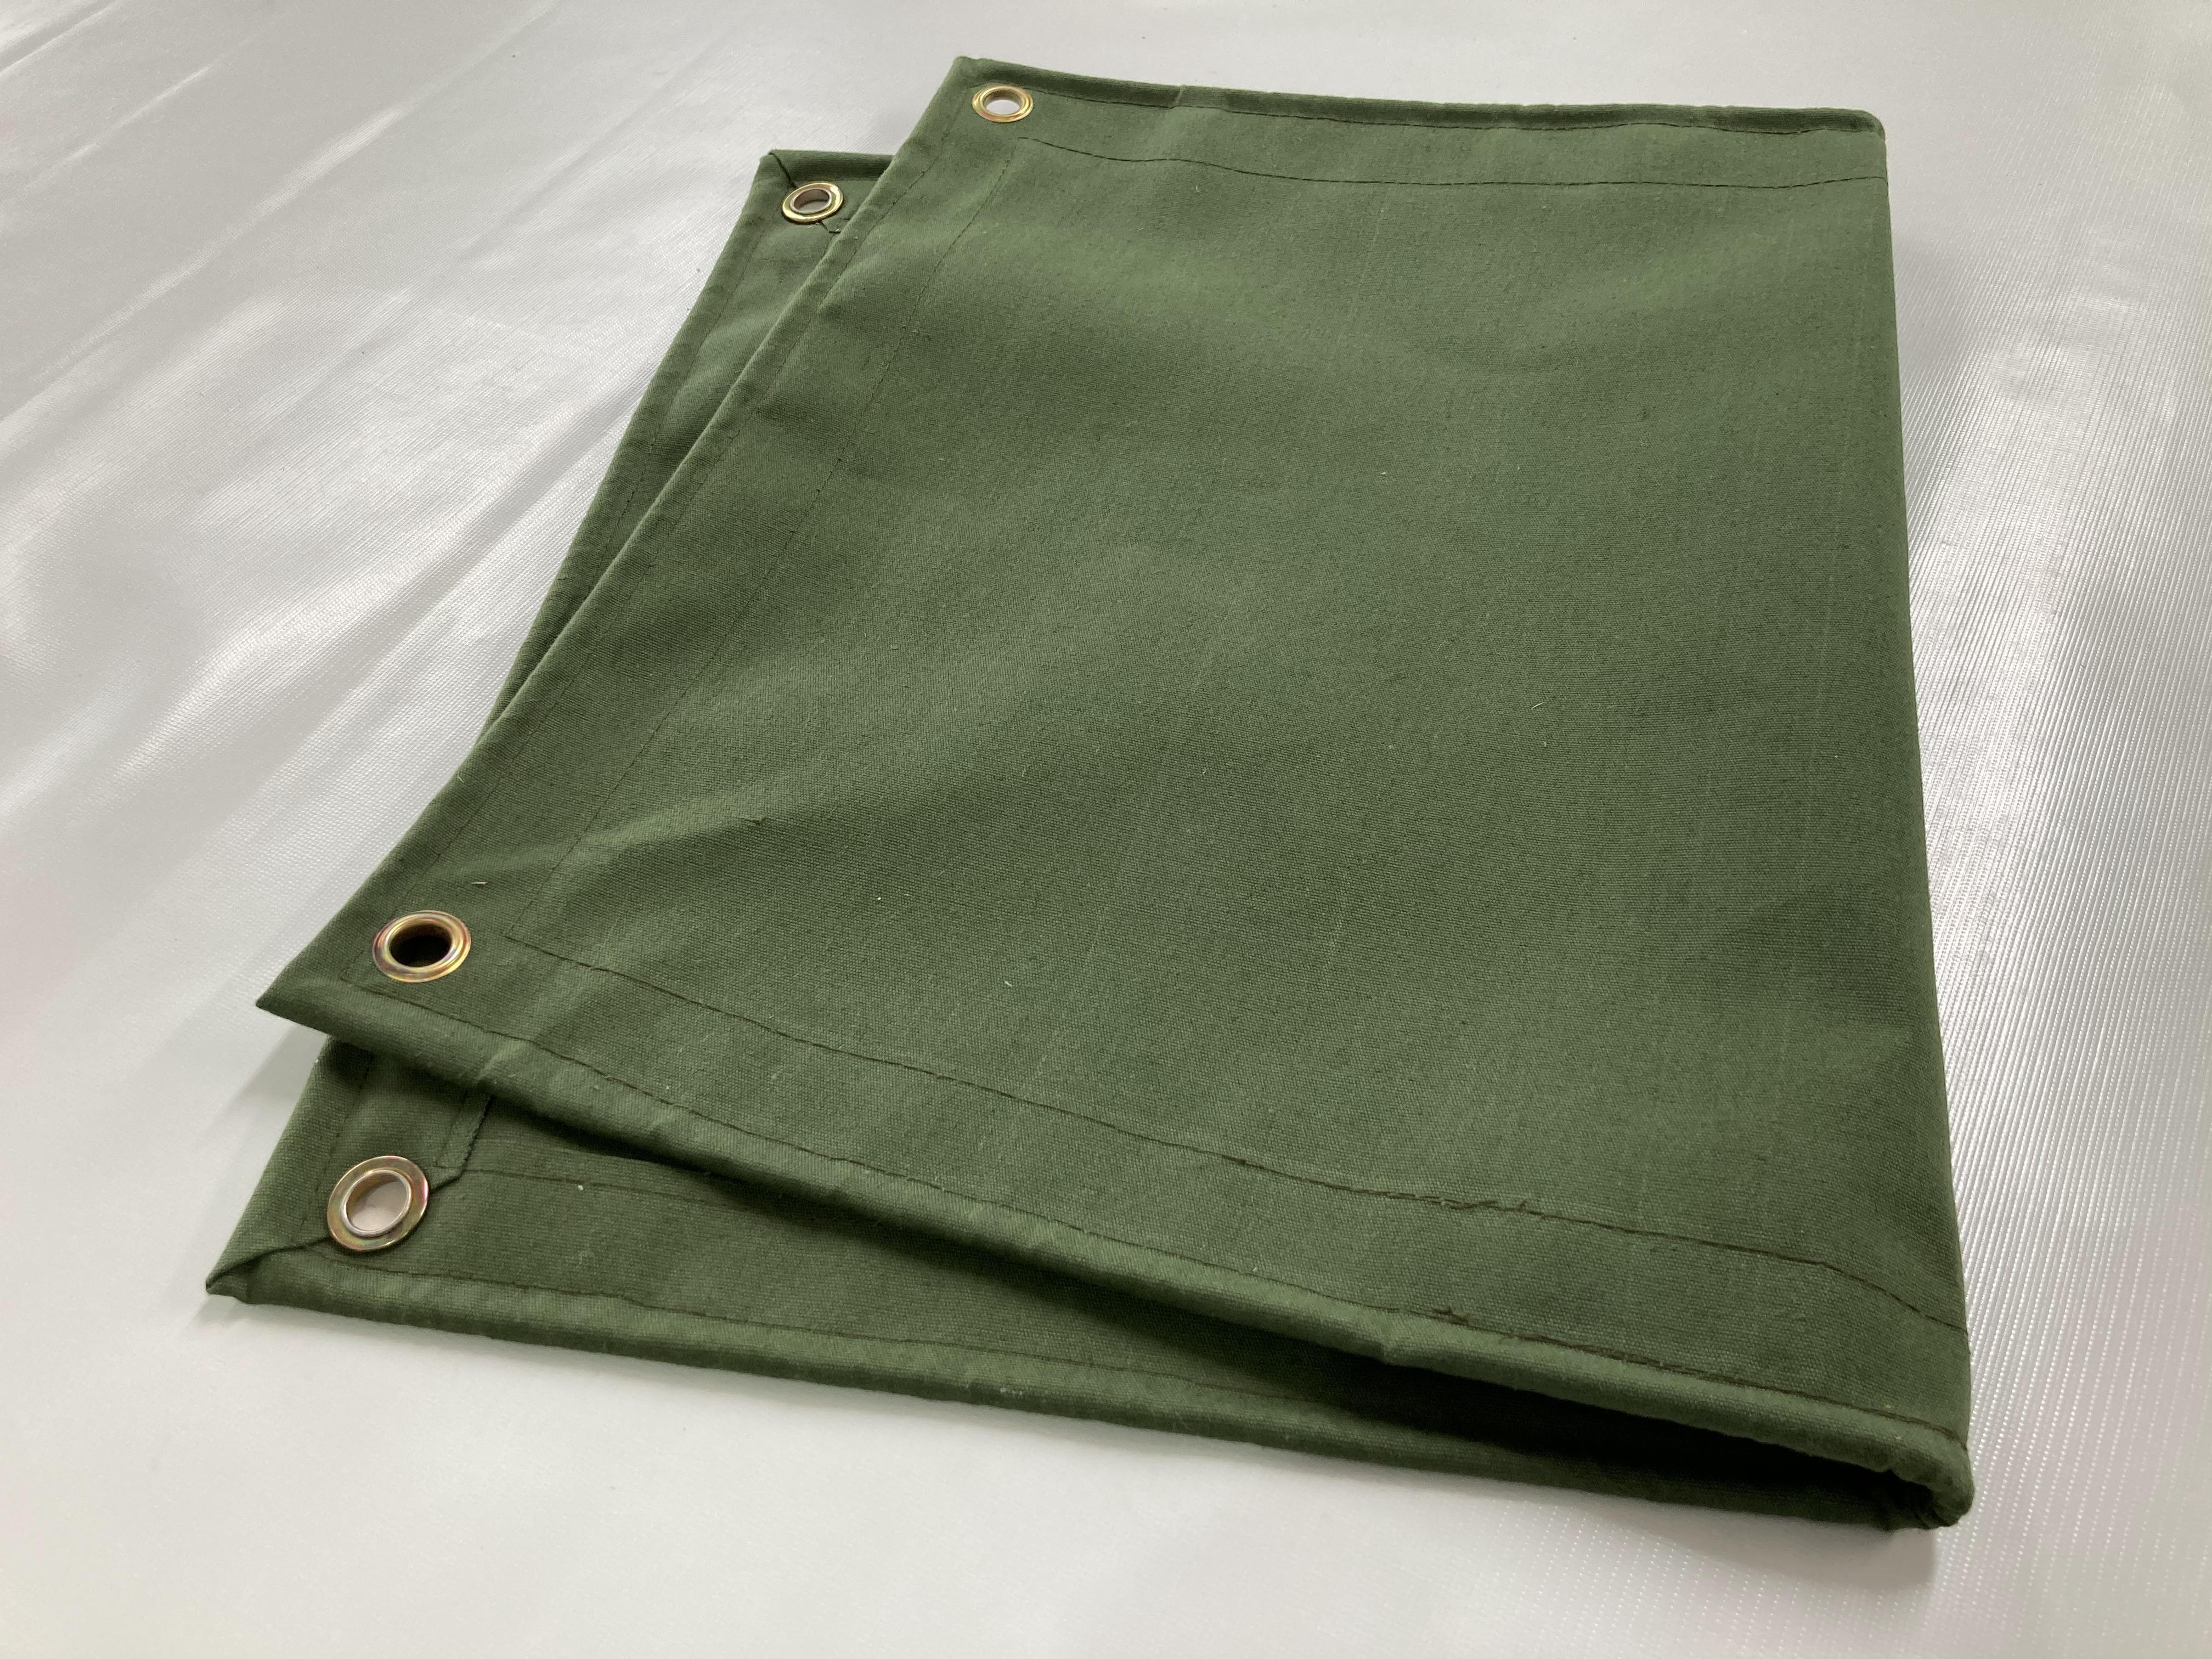 cloth tarp with grommets,large canvas tarpaulin,heavy duty waterproof canvas tarps,